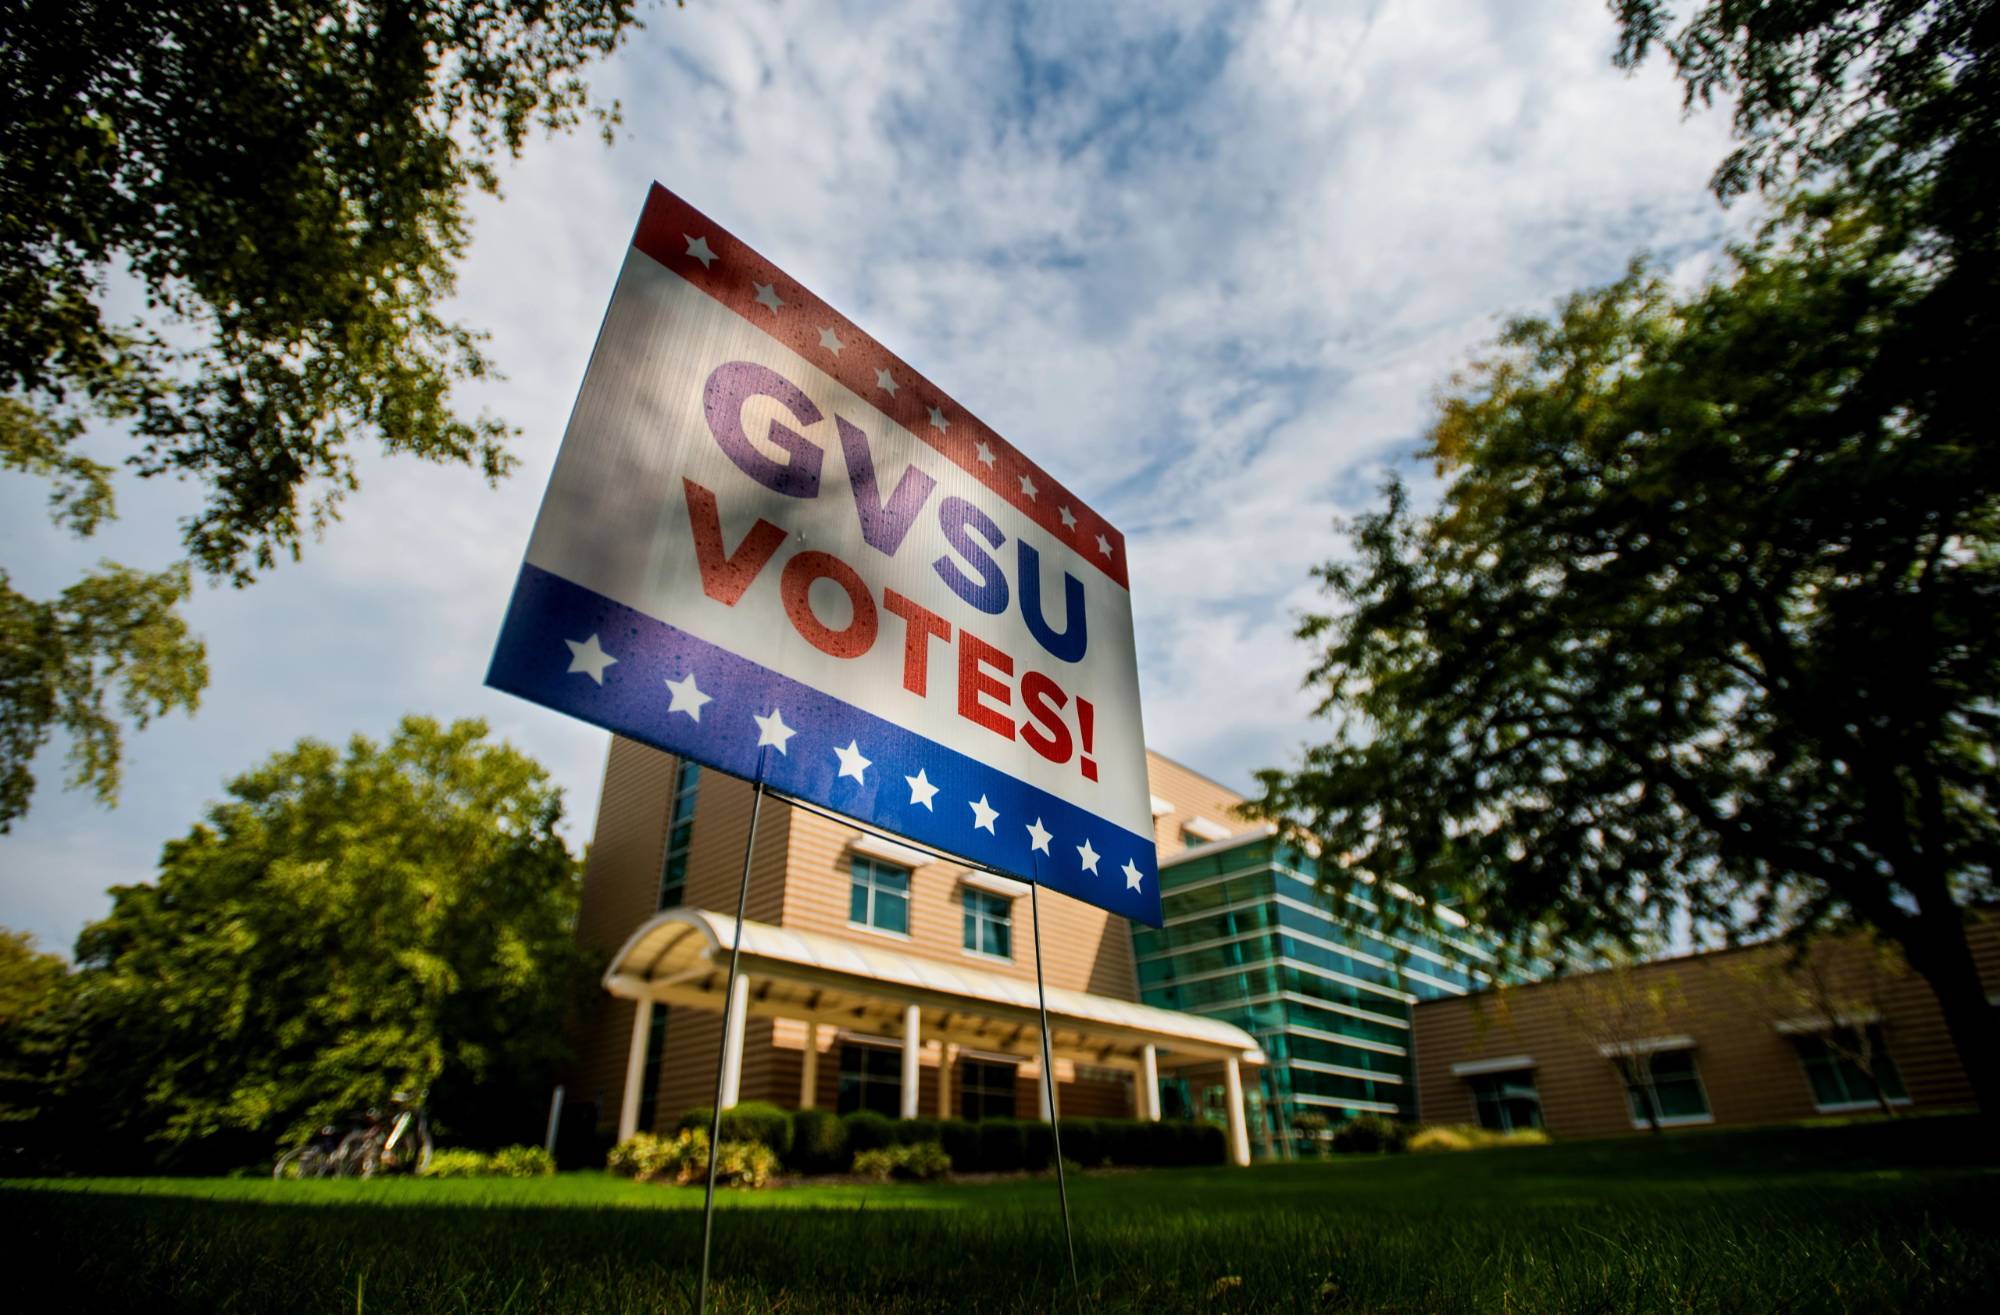 GVSU Votes signage infront of student services